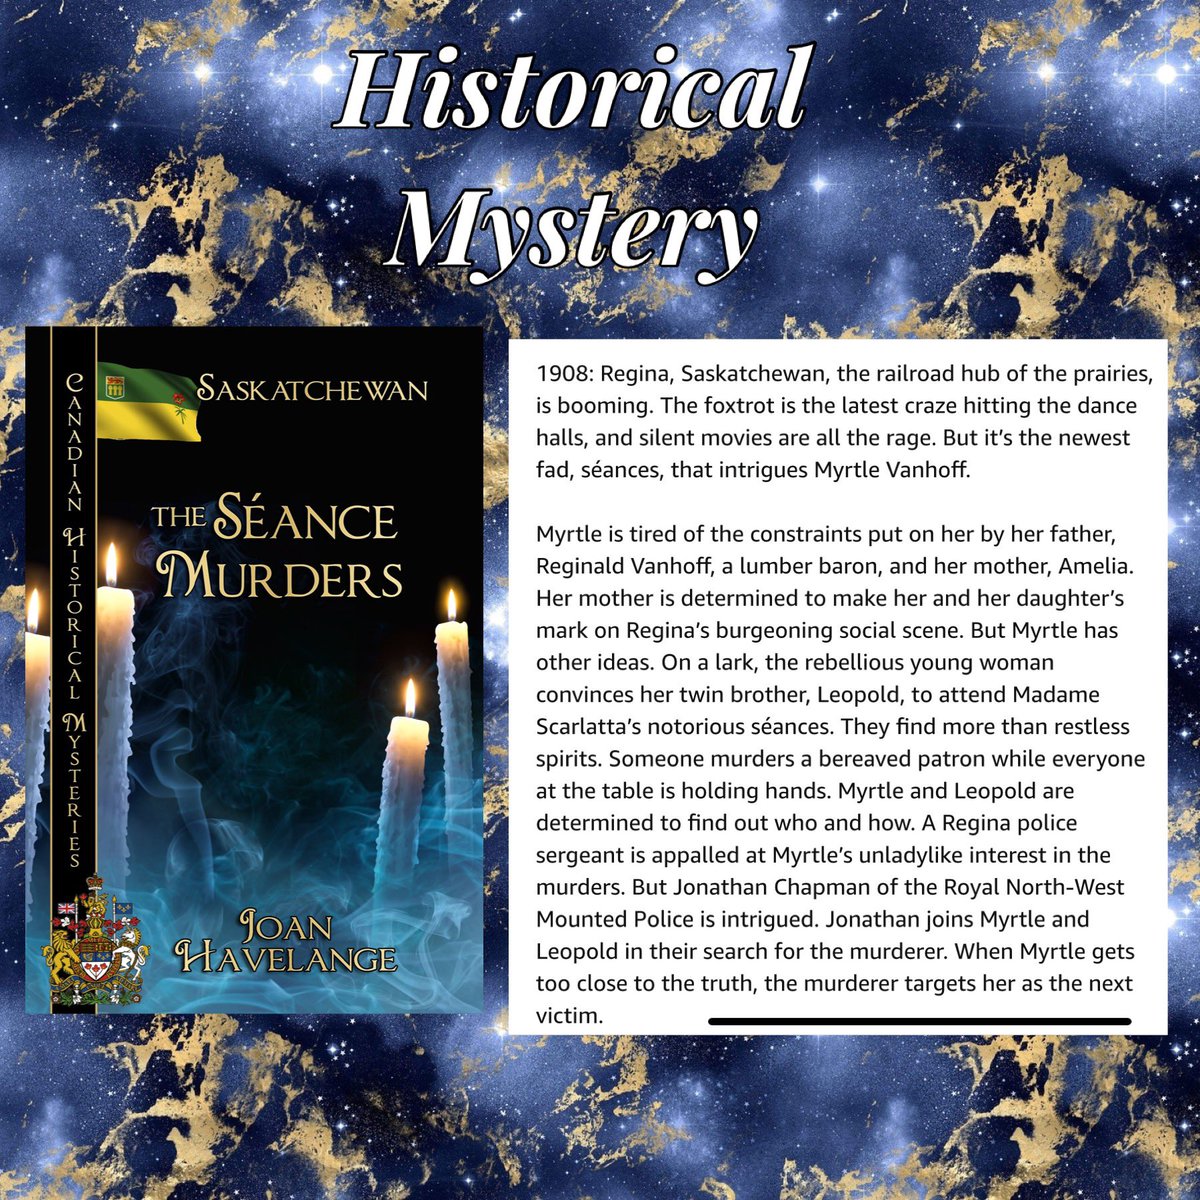 @KindlePromos books2read.com/The-Seance-Mur…
#kindle #HistoricalFiction #historicalmystery